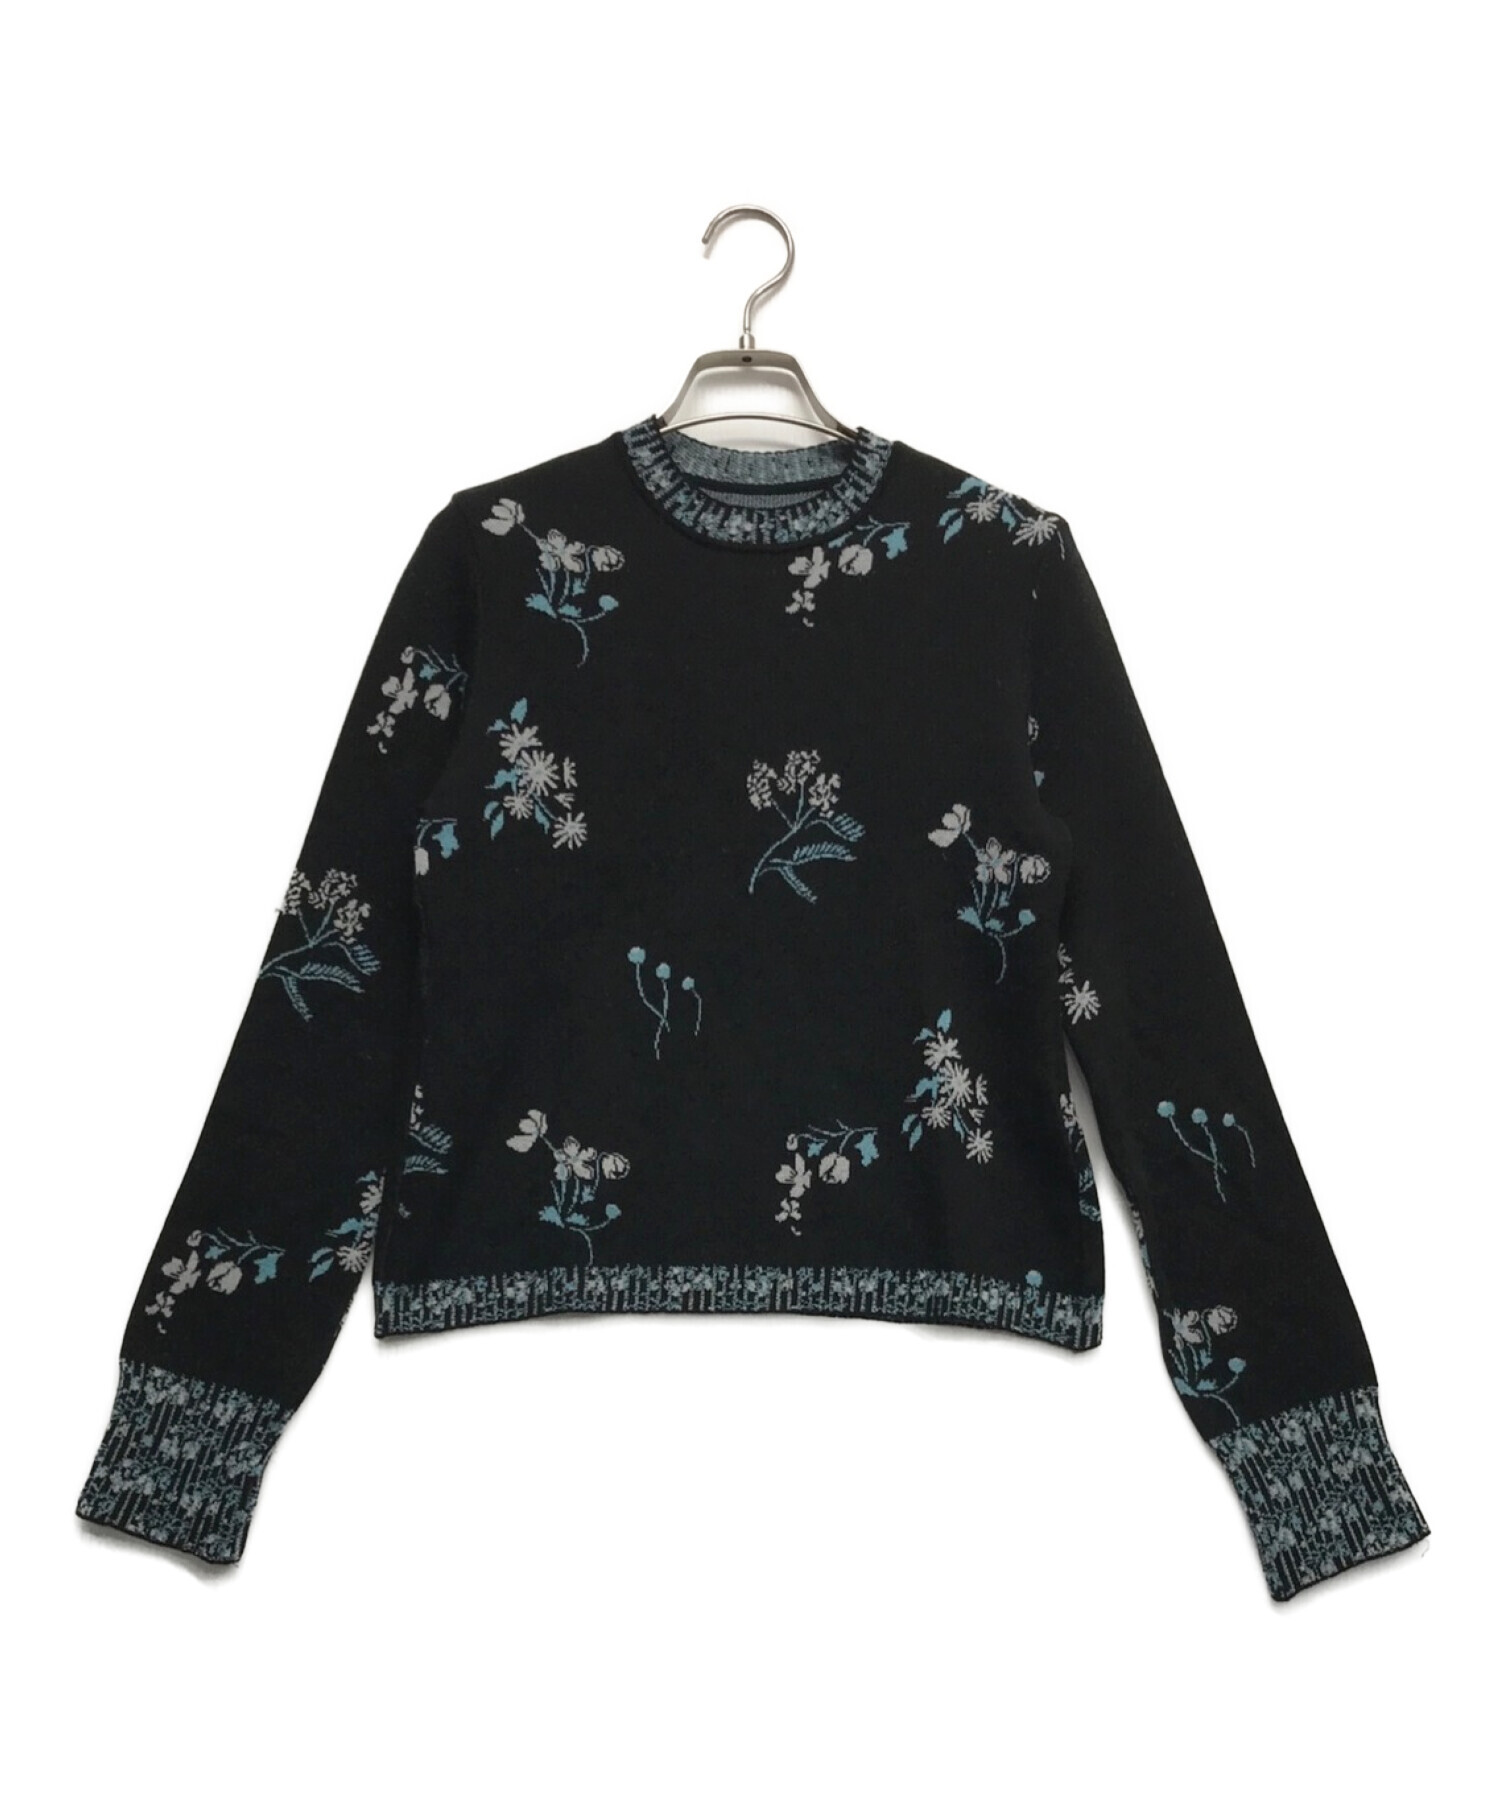 mame kurogouchi (マメクロゴウチ) Floral Jacquard Knitted Top ブラック サイズ:1